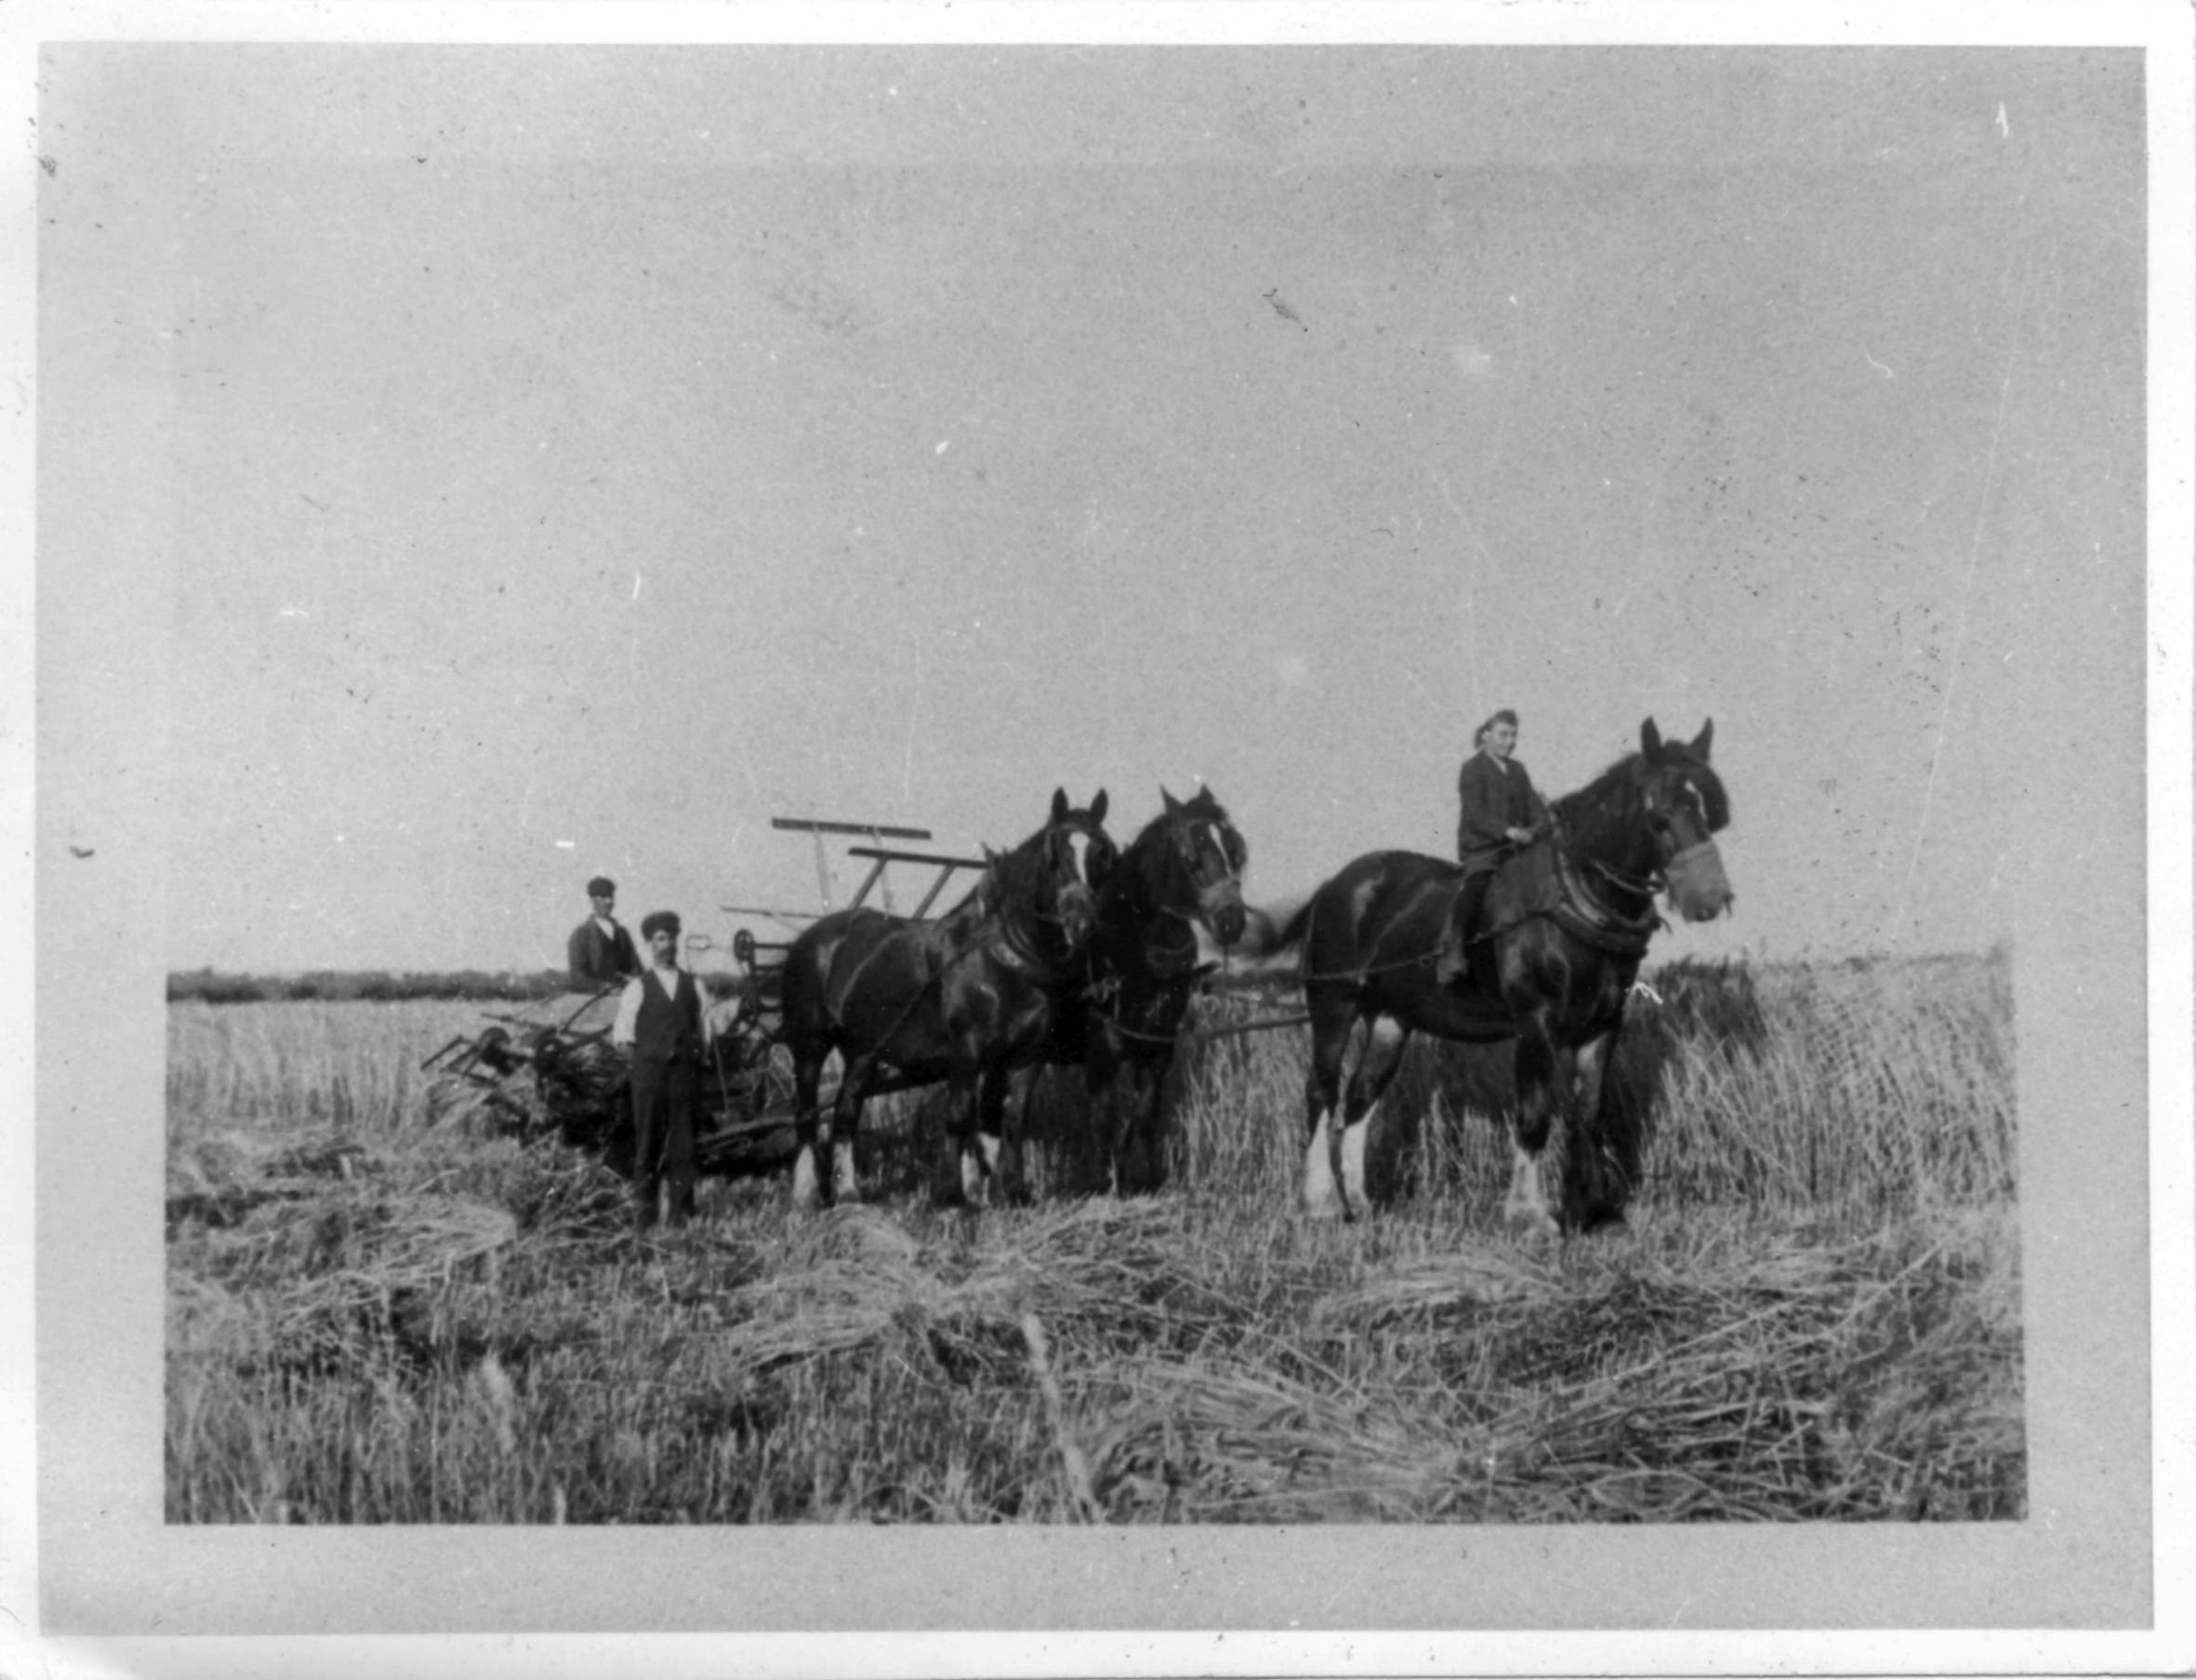 Harvest time in 1920s